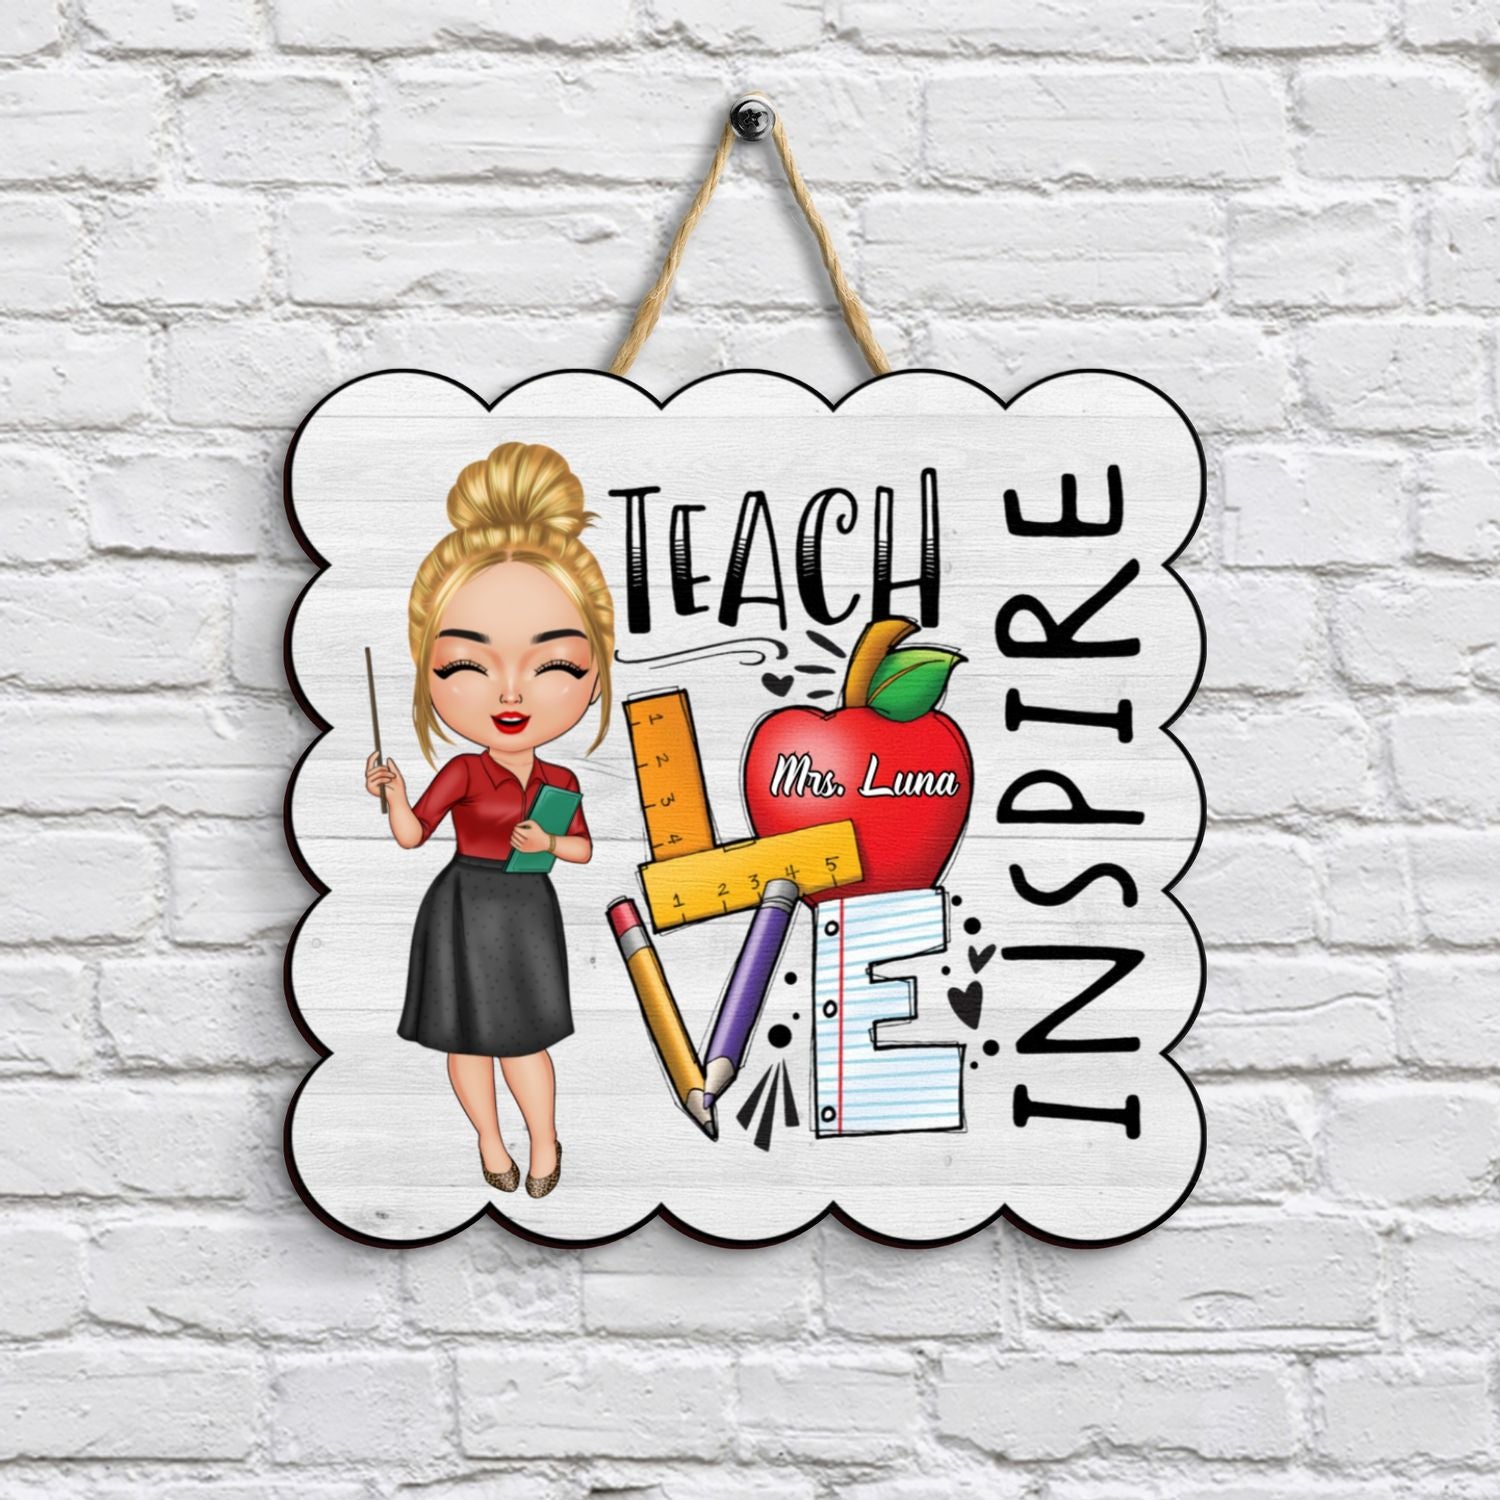 Personalized Door Sign - Gift For Teacher - Teach Love Inspire